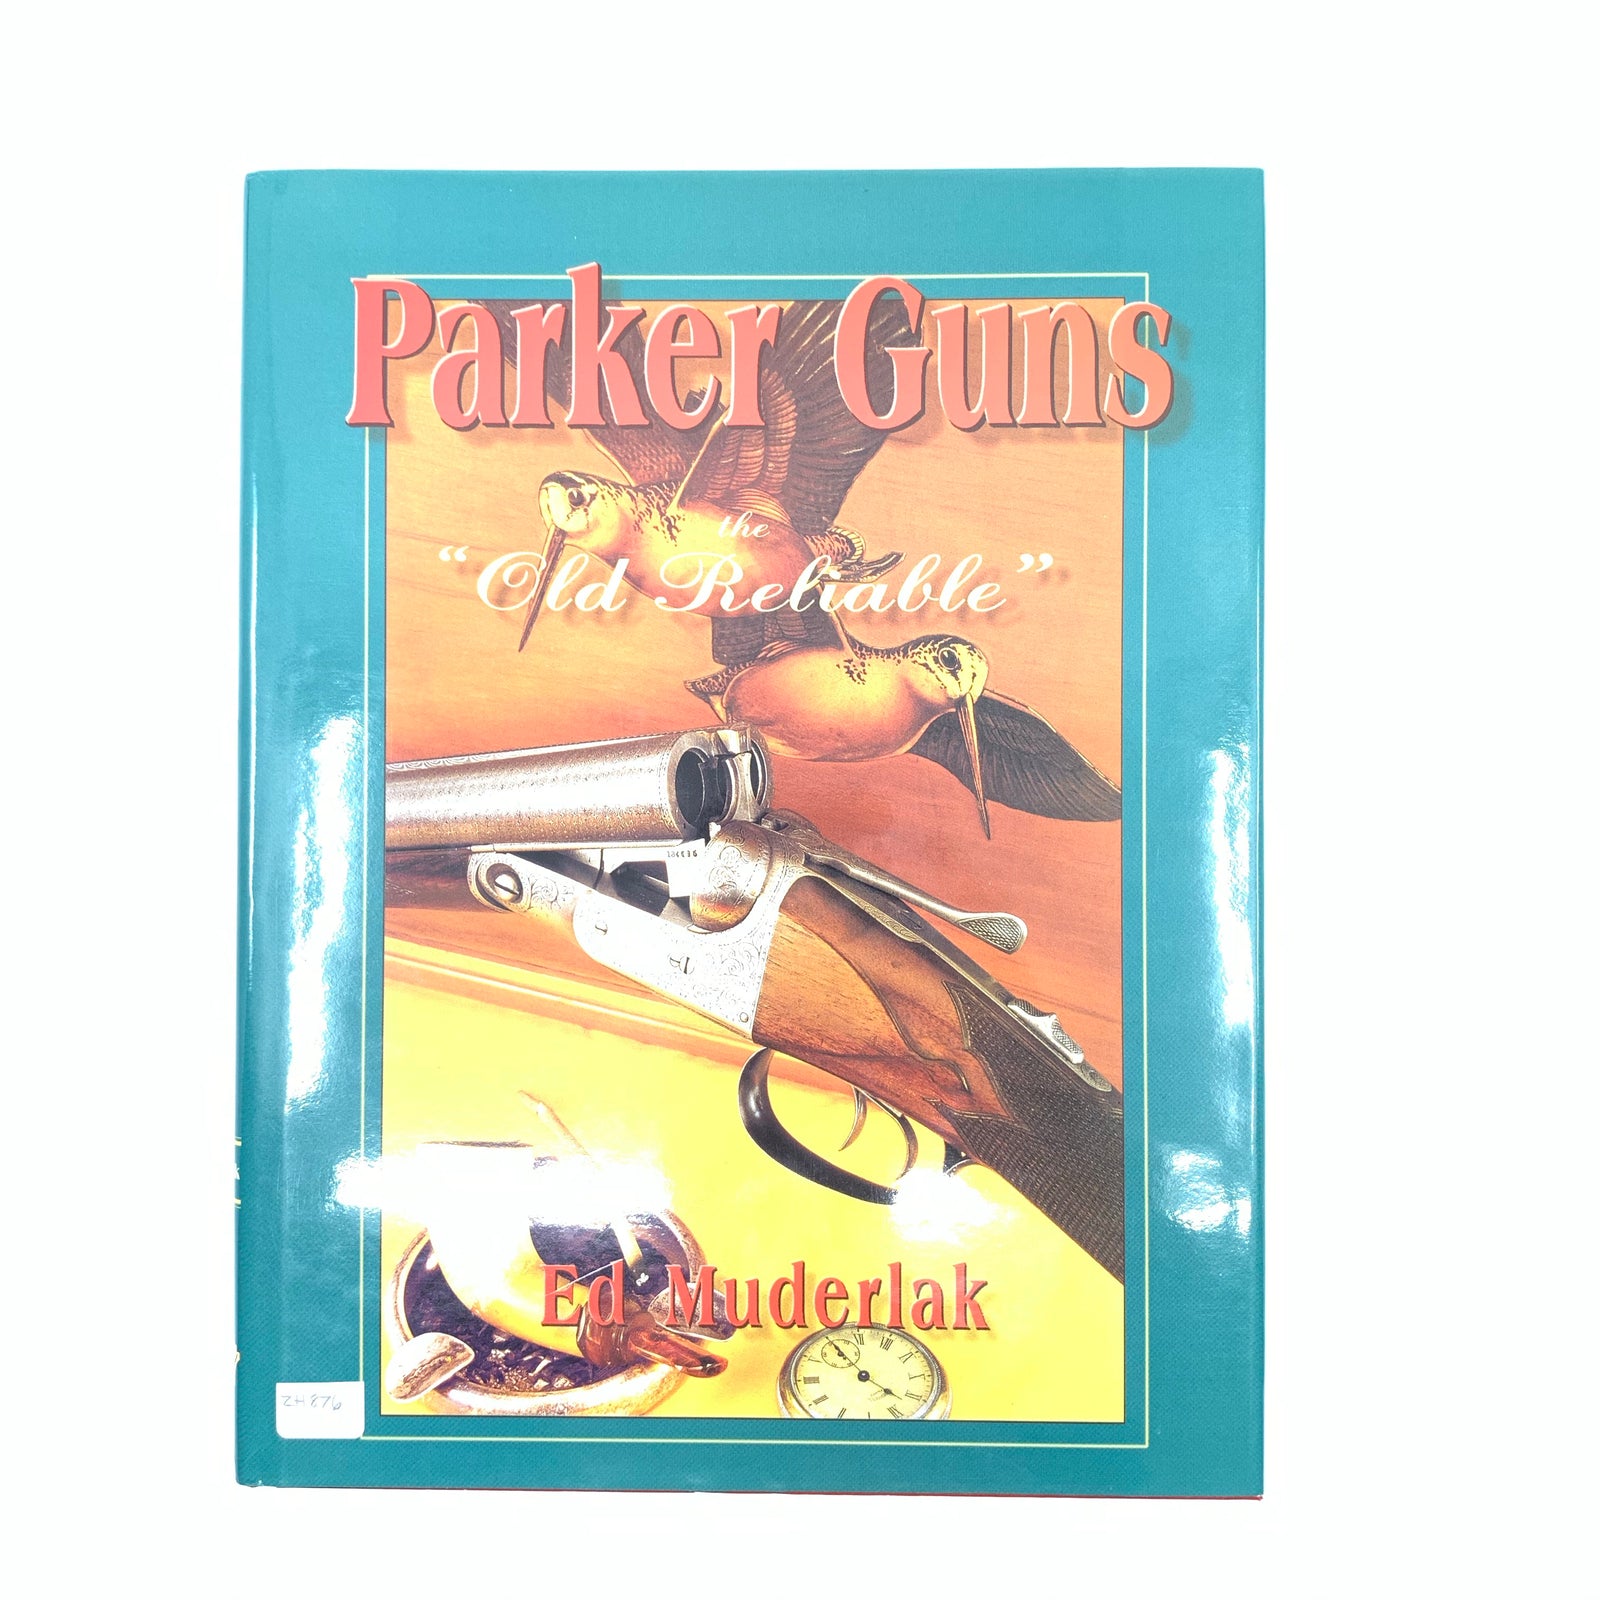 Parker Guns the "Old Reliable" HC270 pgs by Ed Muderlak